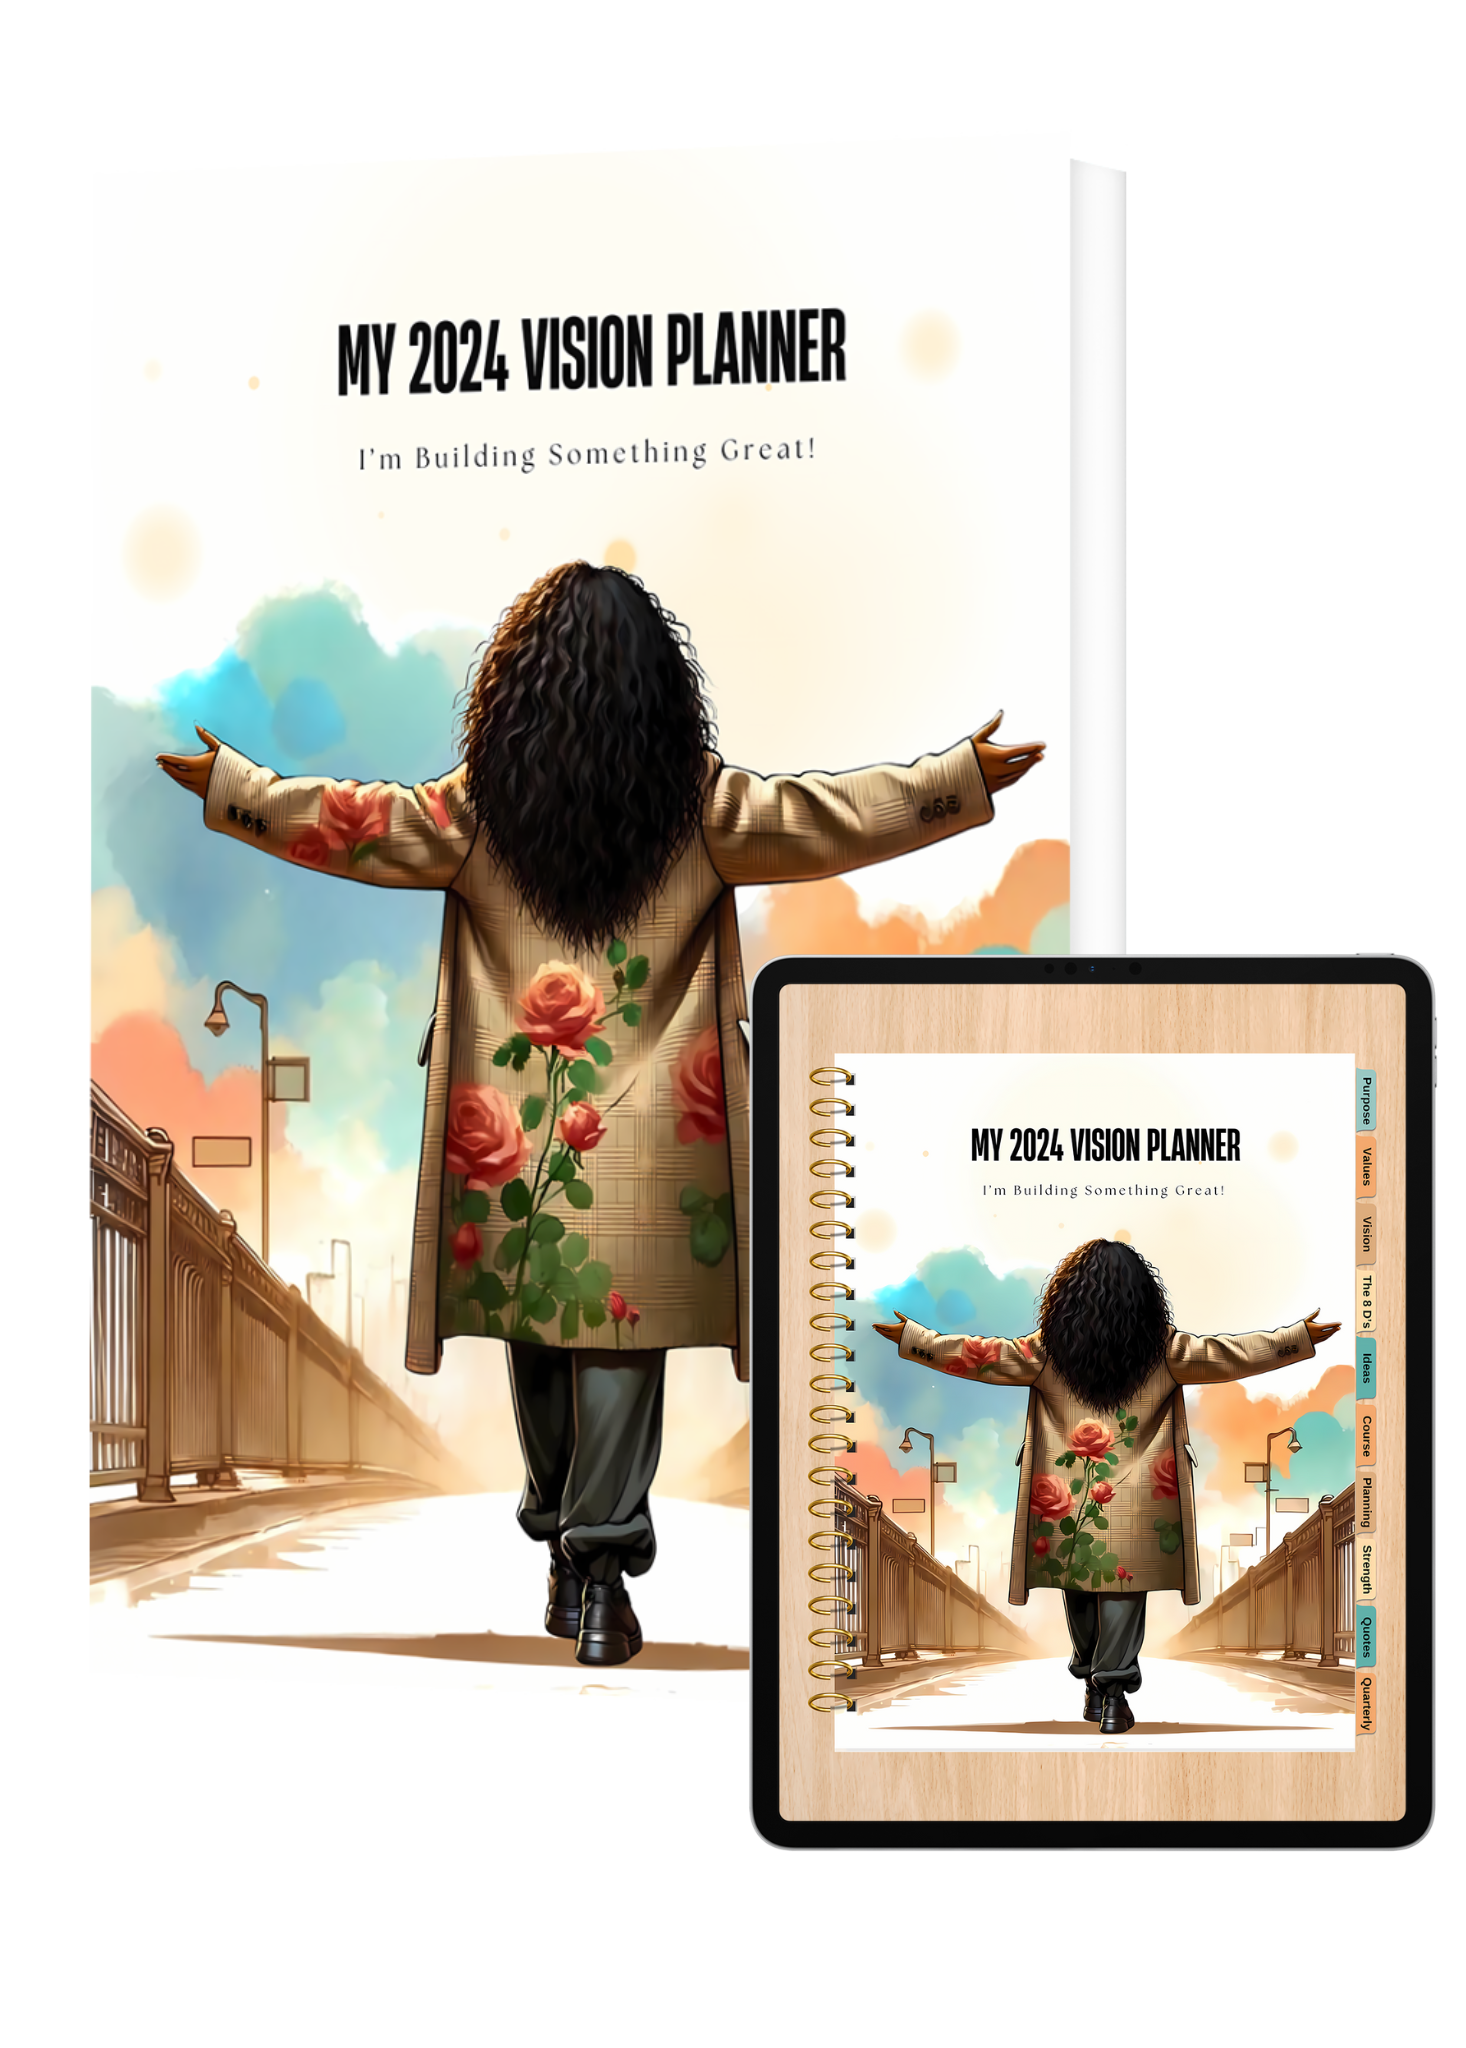 My 2024 Vision Planner Mockup Image